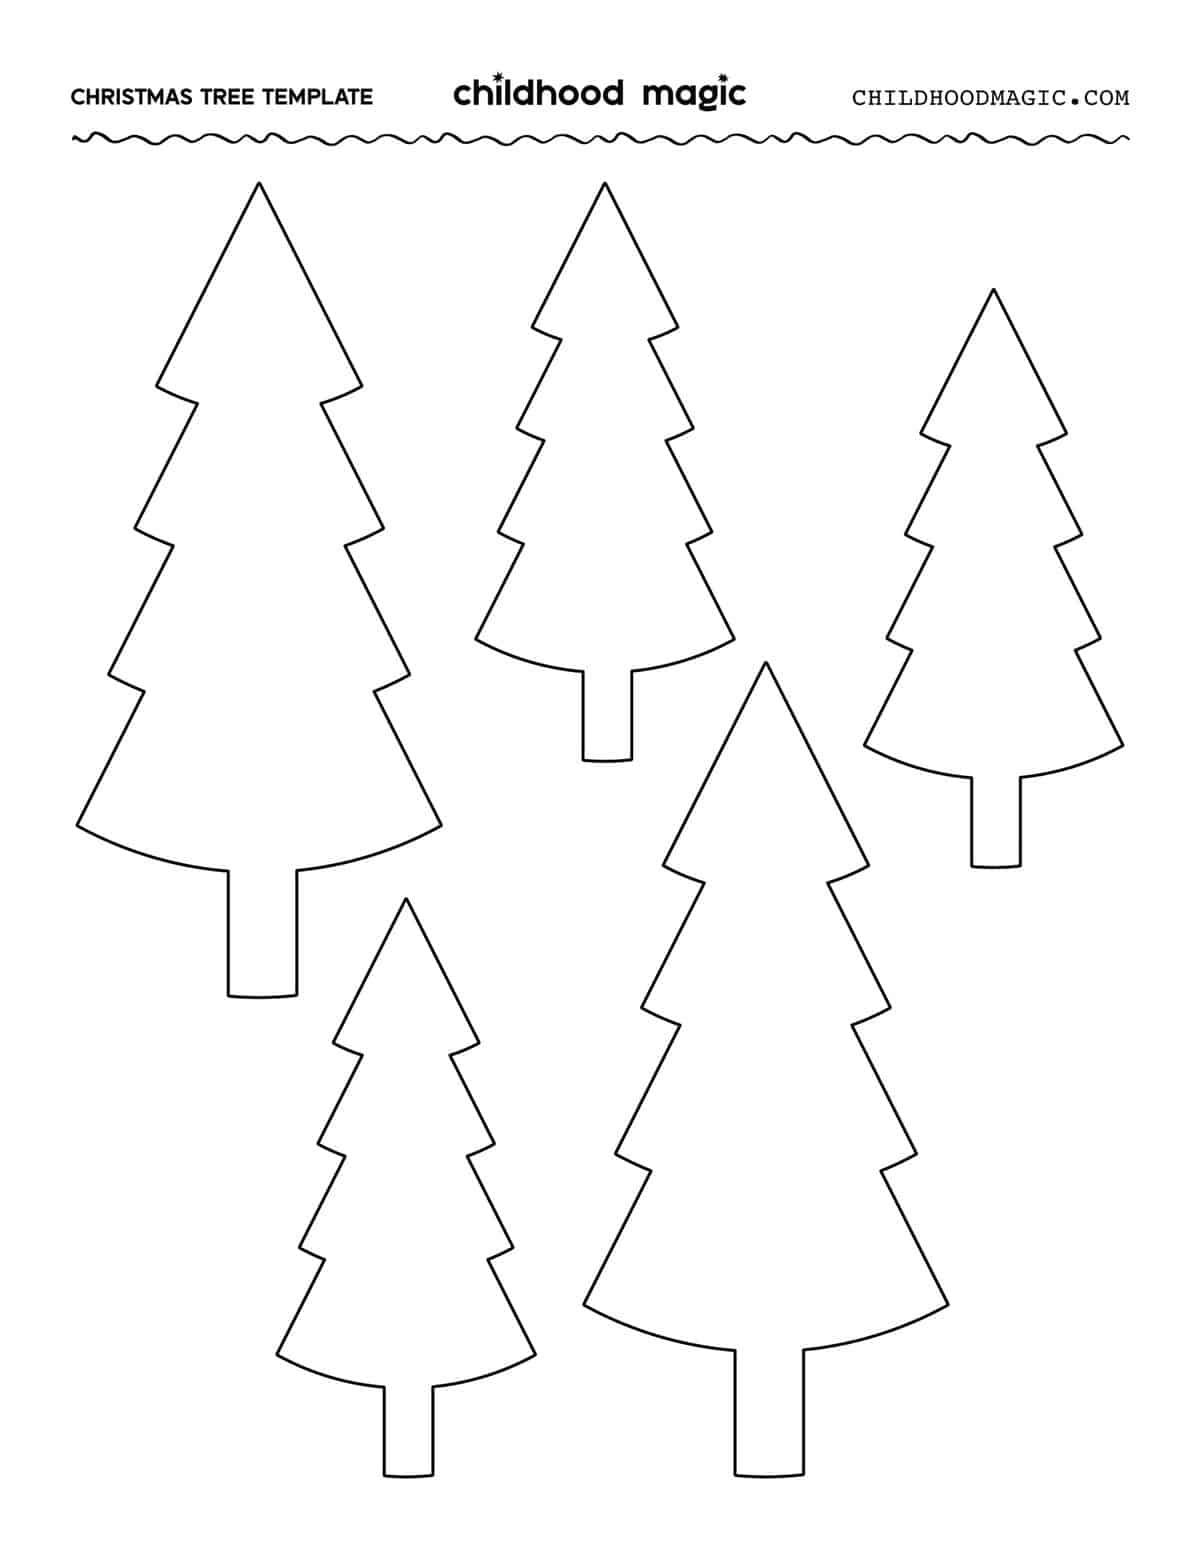 https://childhoodmagic.com/wp-content/uploads/2022/08/Childhood-Magic-Christmas-tree-template-printable-set-6.jpg